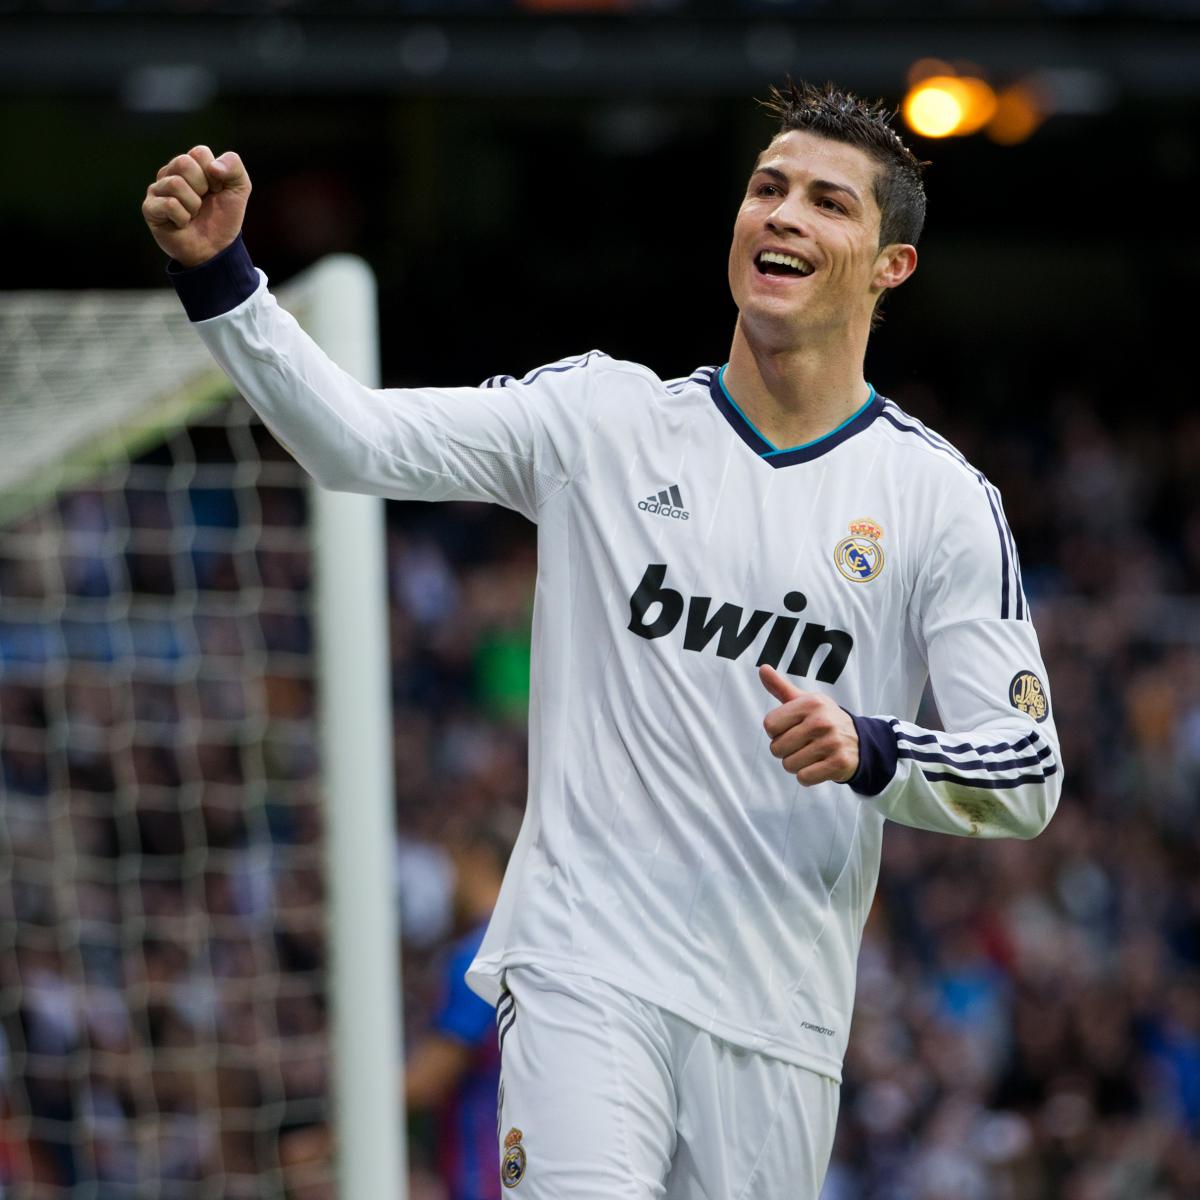 Steam Workshop::Cristiano Ronaldo Real Madrid 2013/14